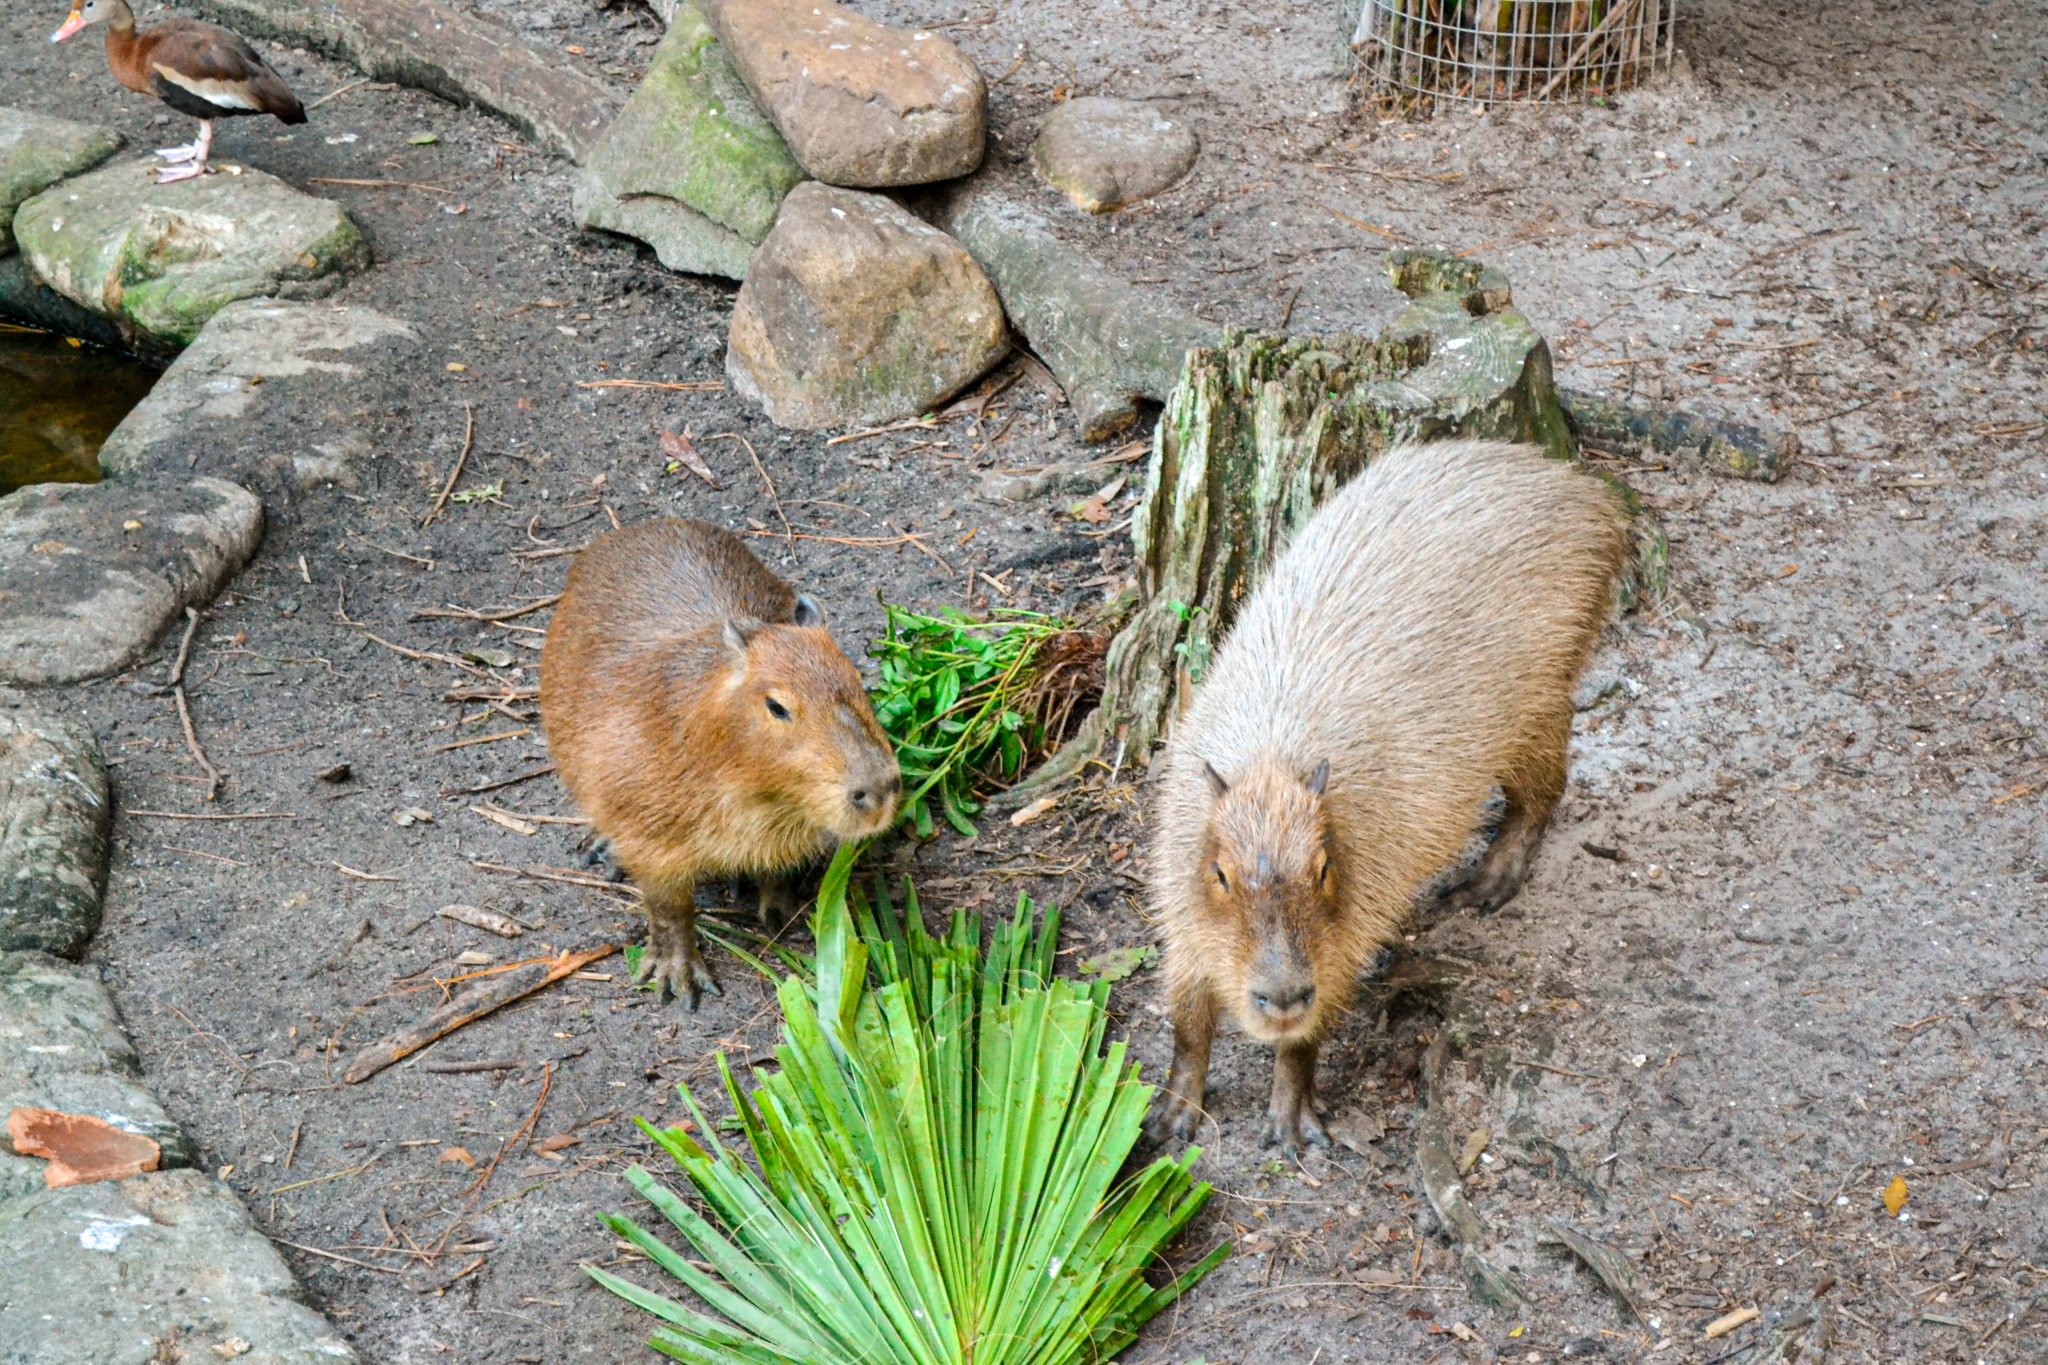 Two capybaras in a zoo